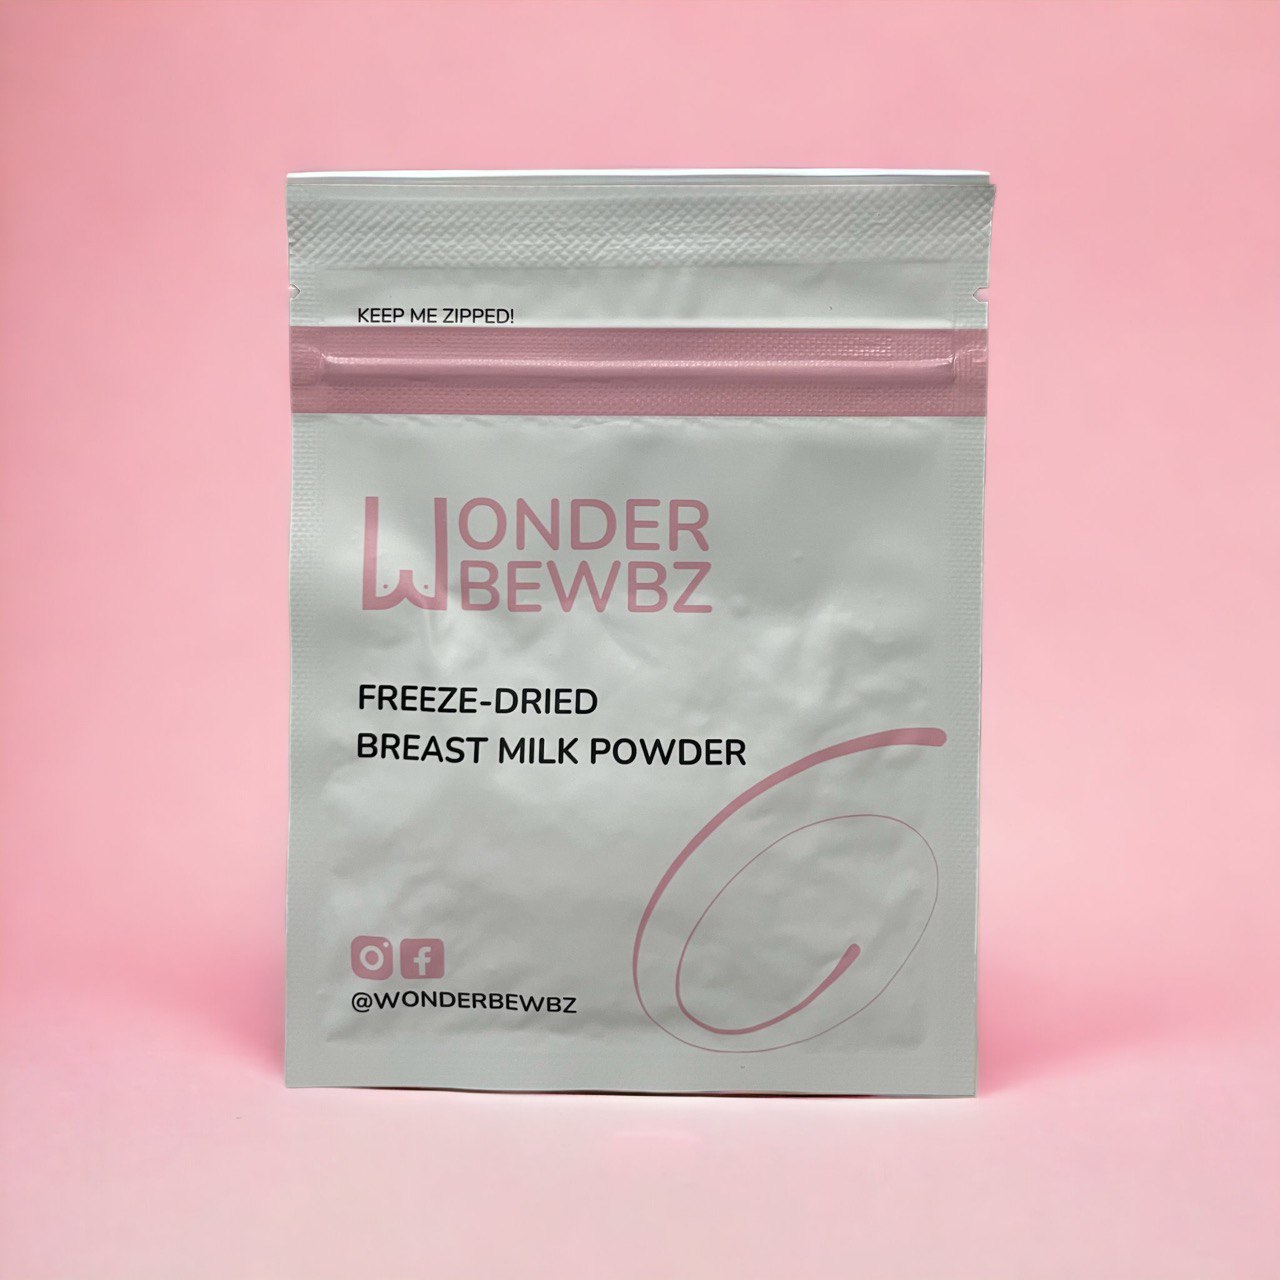 Your Breast Milk Powder